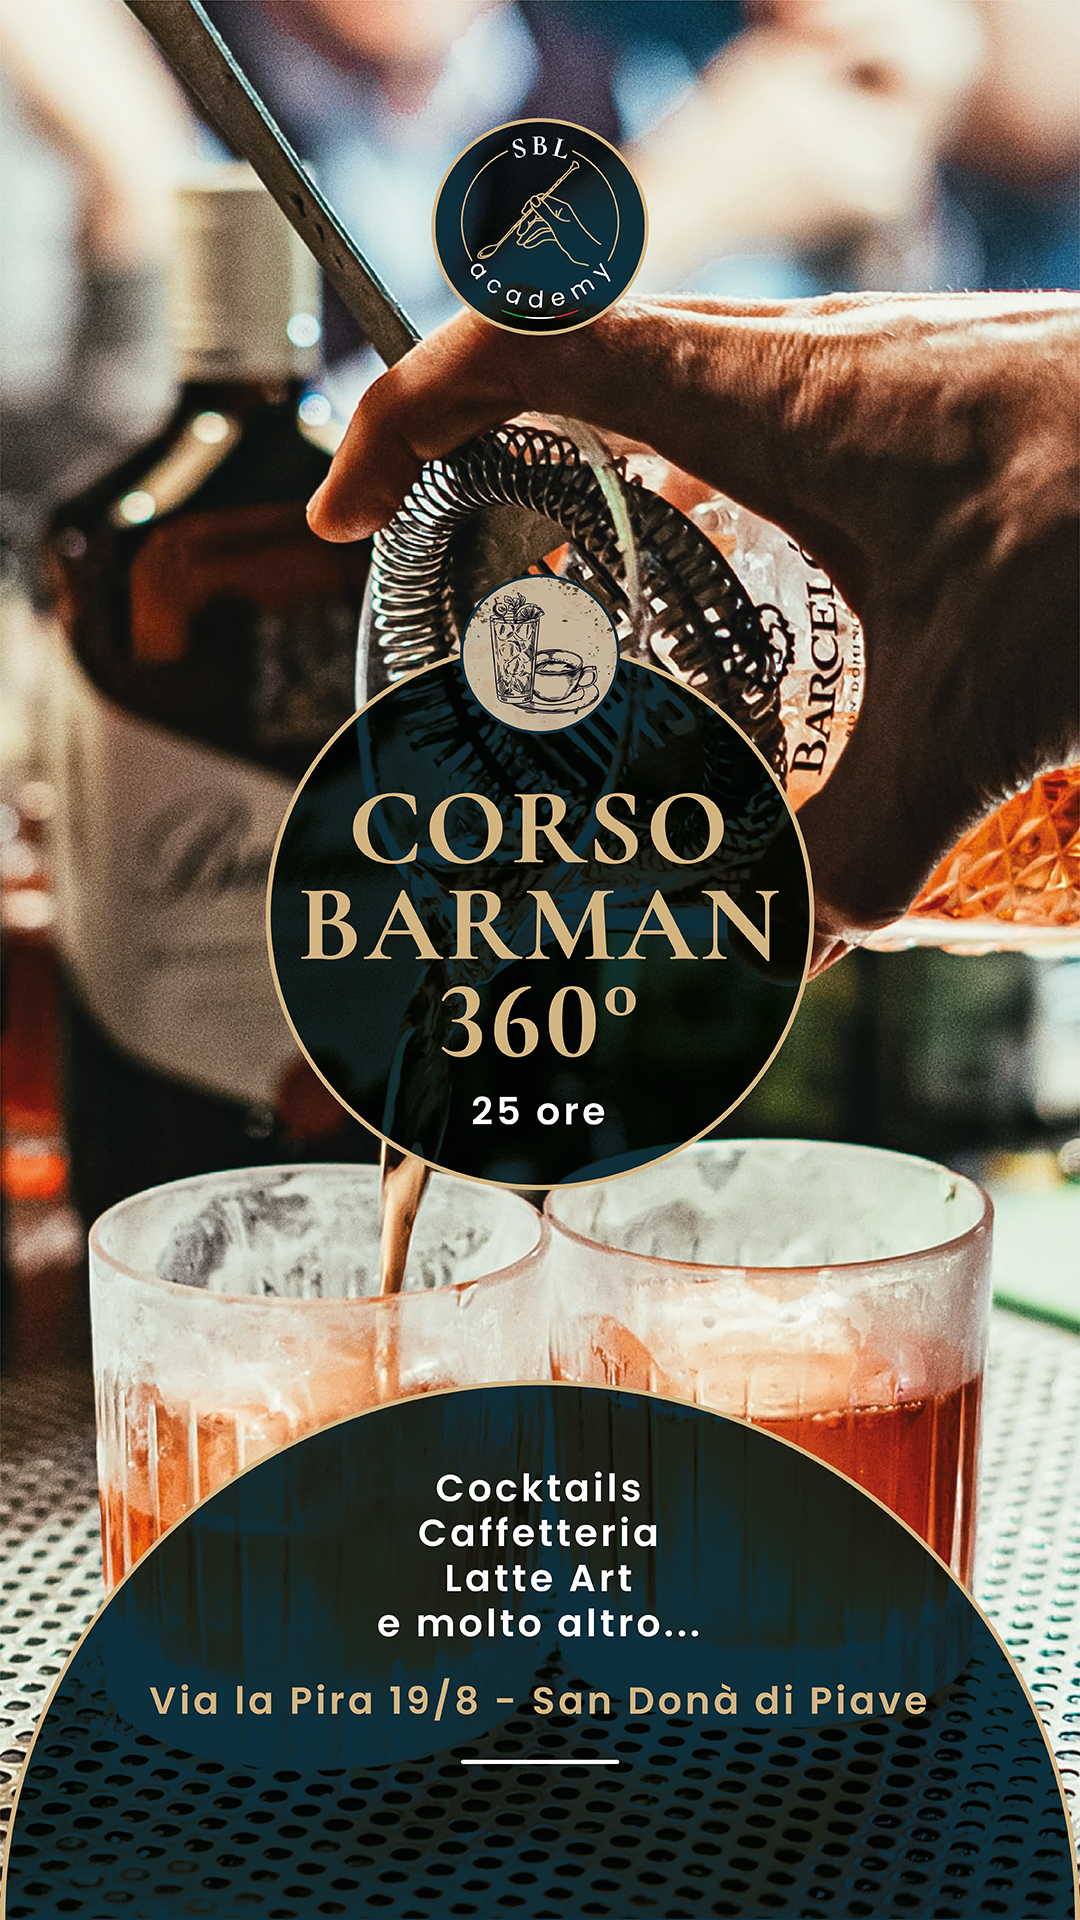 SBL ACADEMY_CORSO BARMAN 360-02